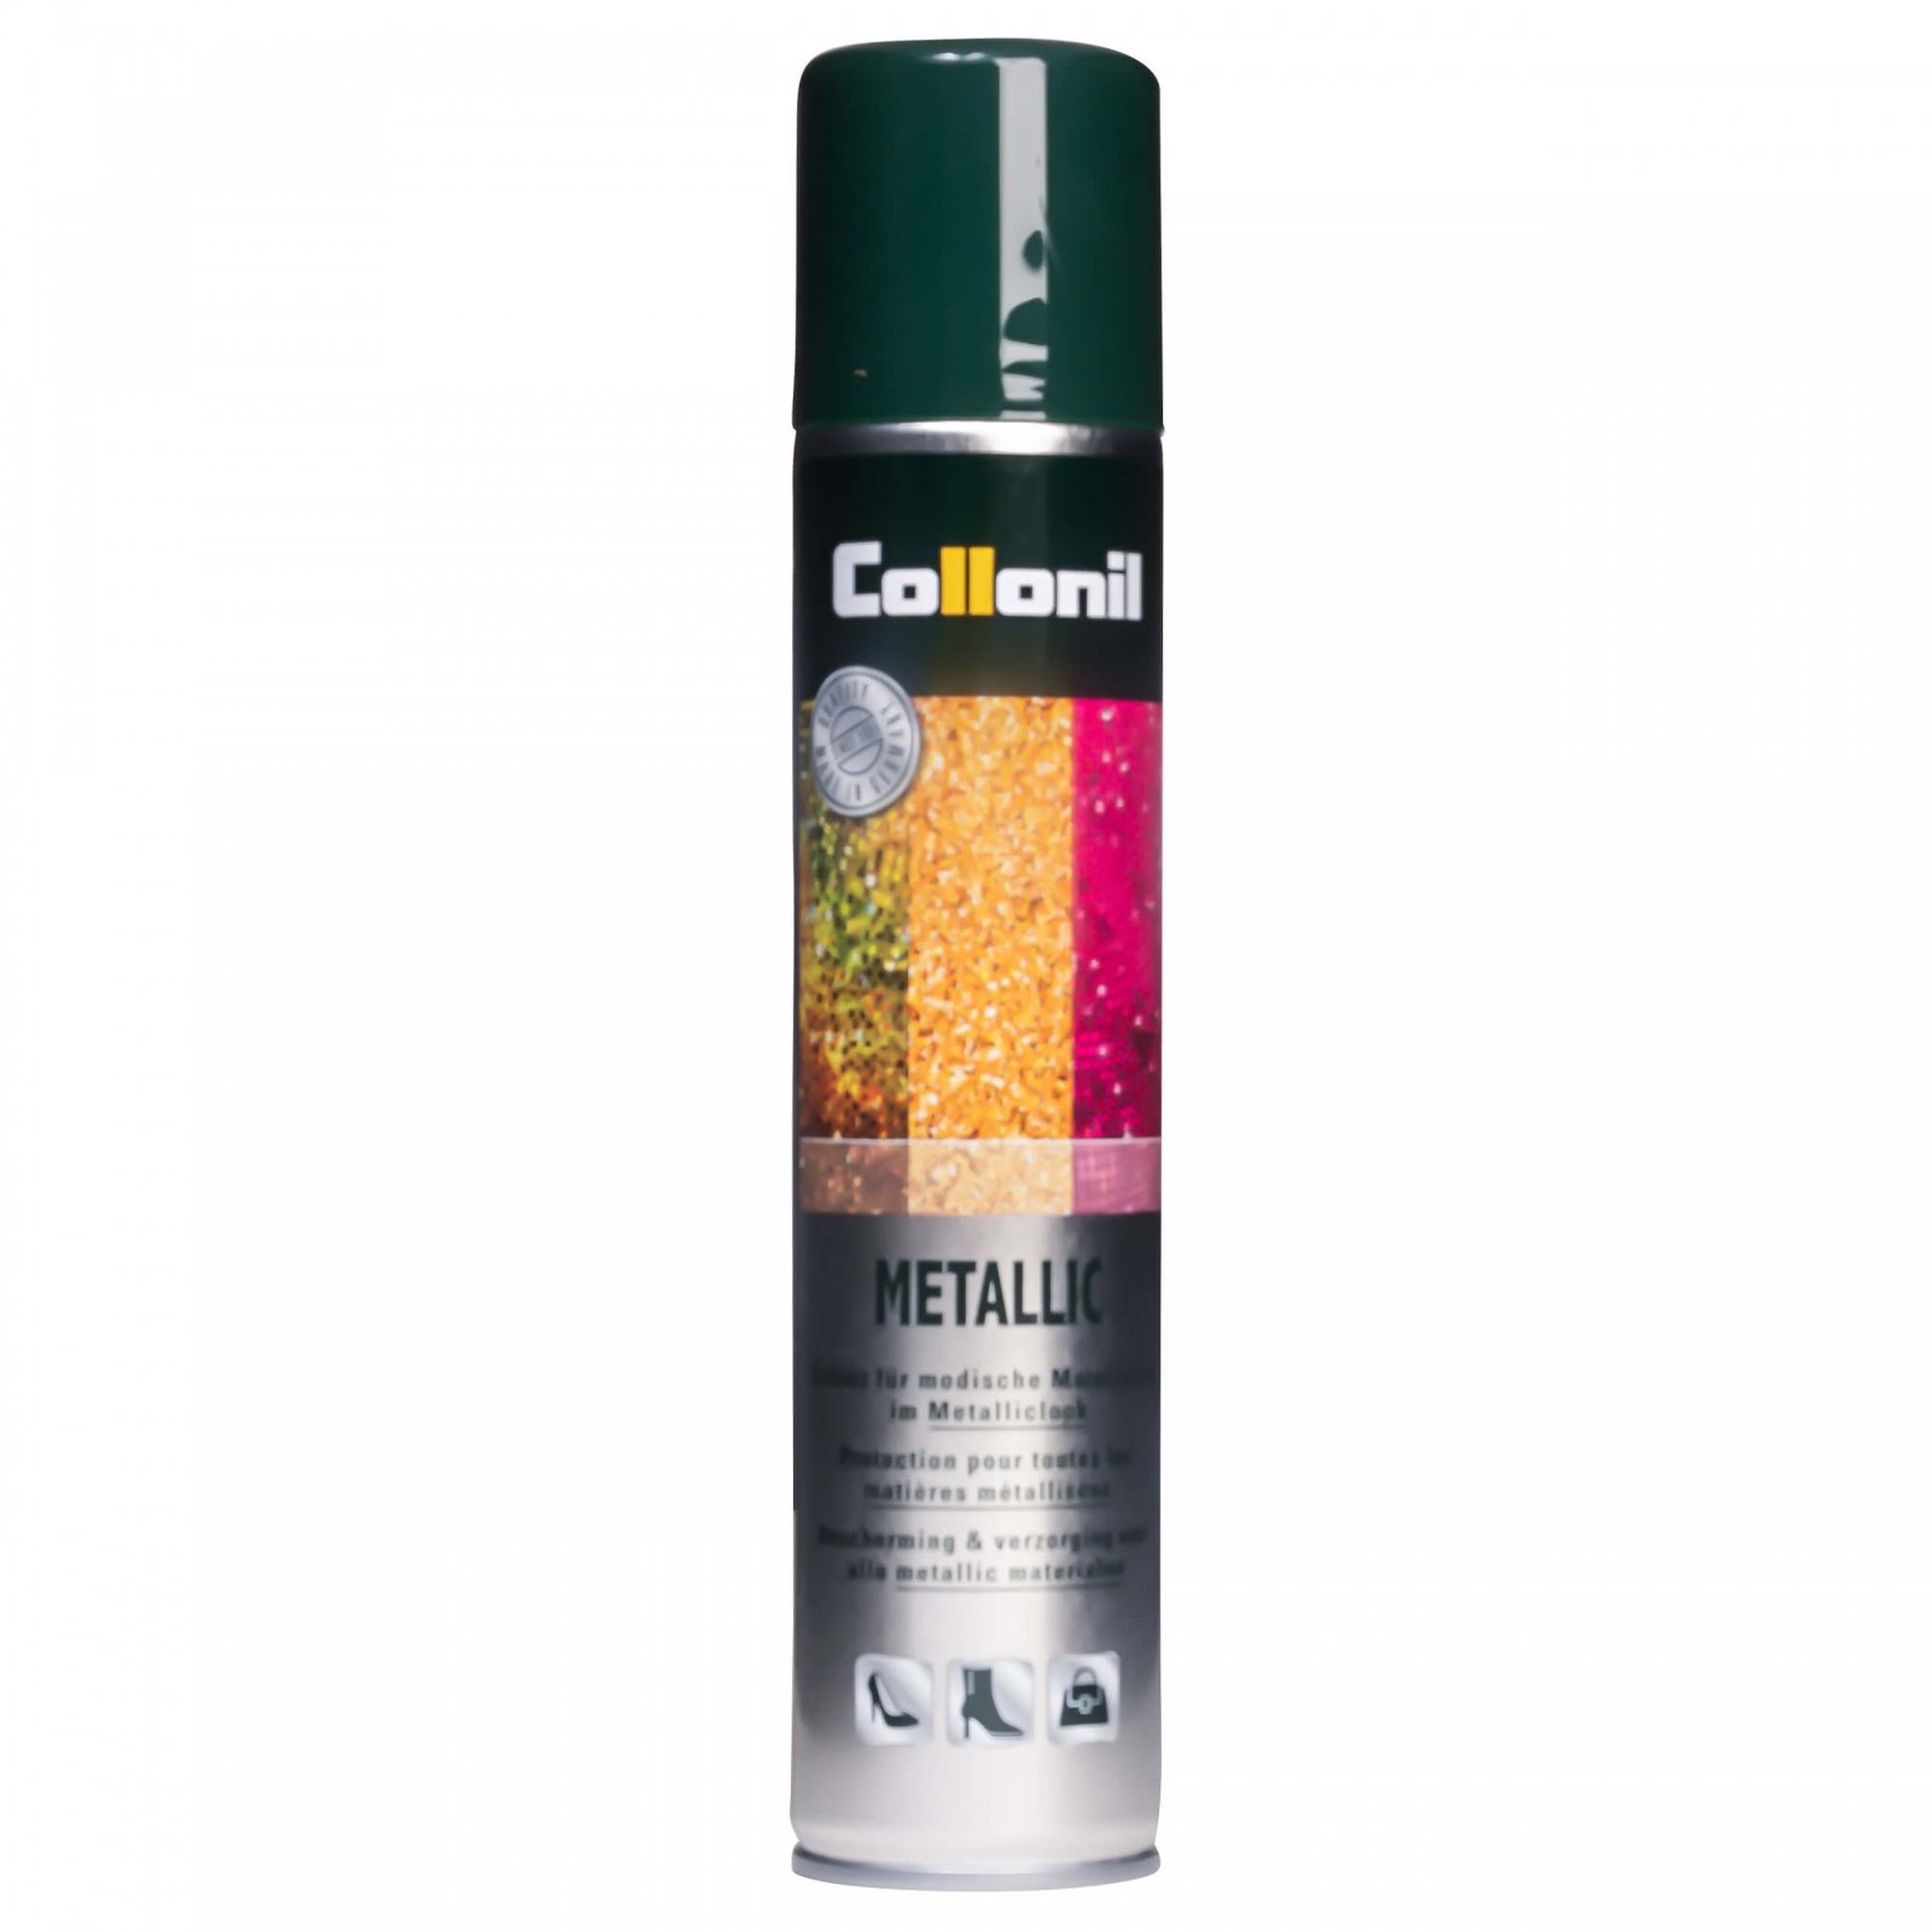 Collonil Metallic Spray 200ml